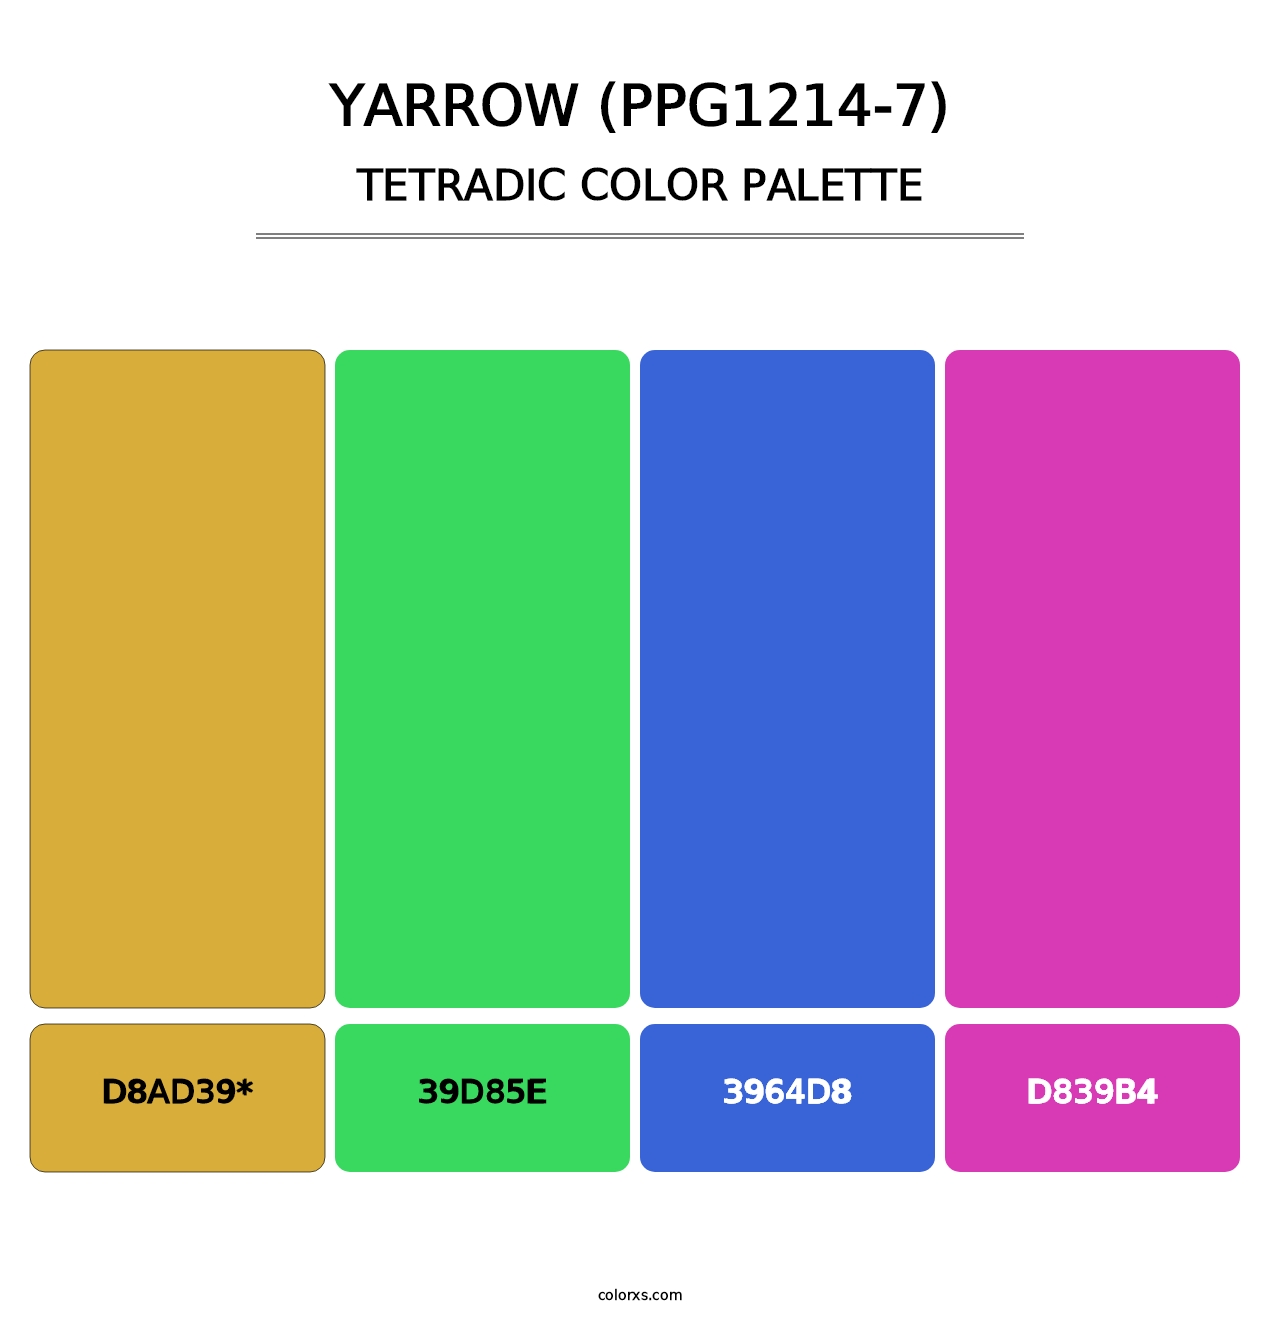 Yarrow (PPG1214-7) - Tetradic Color Palette